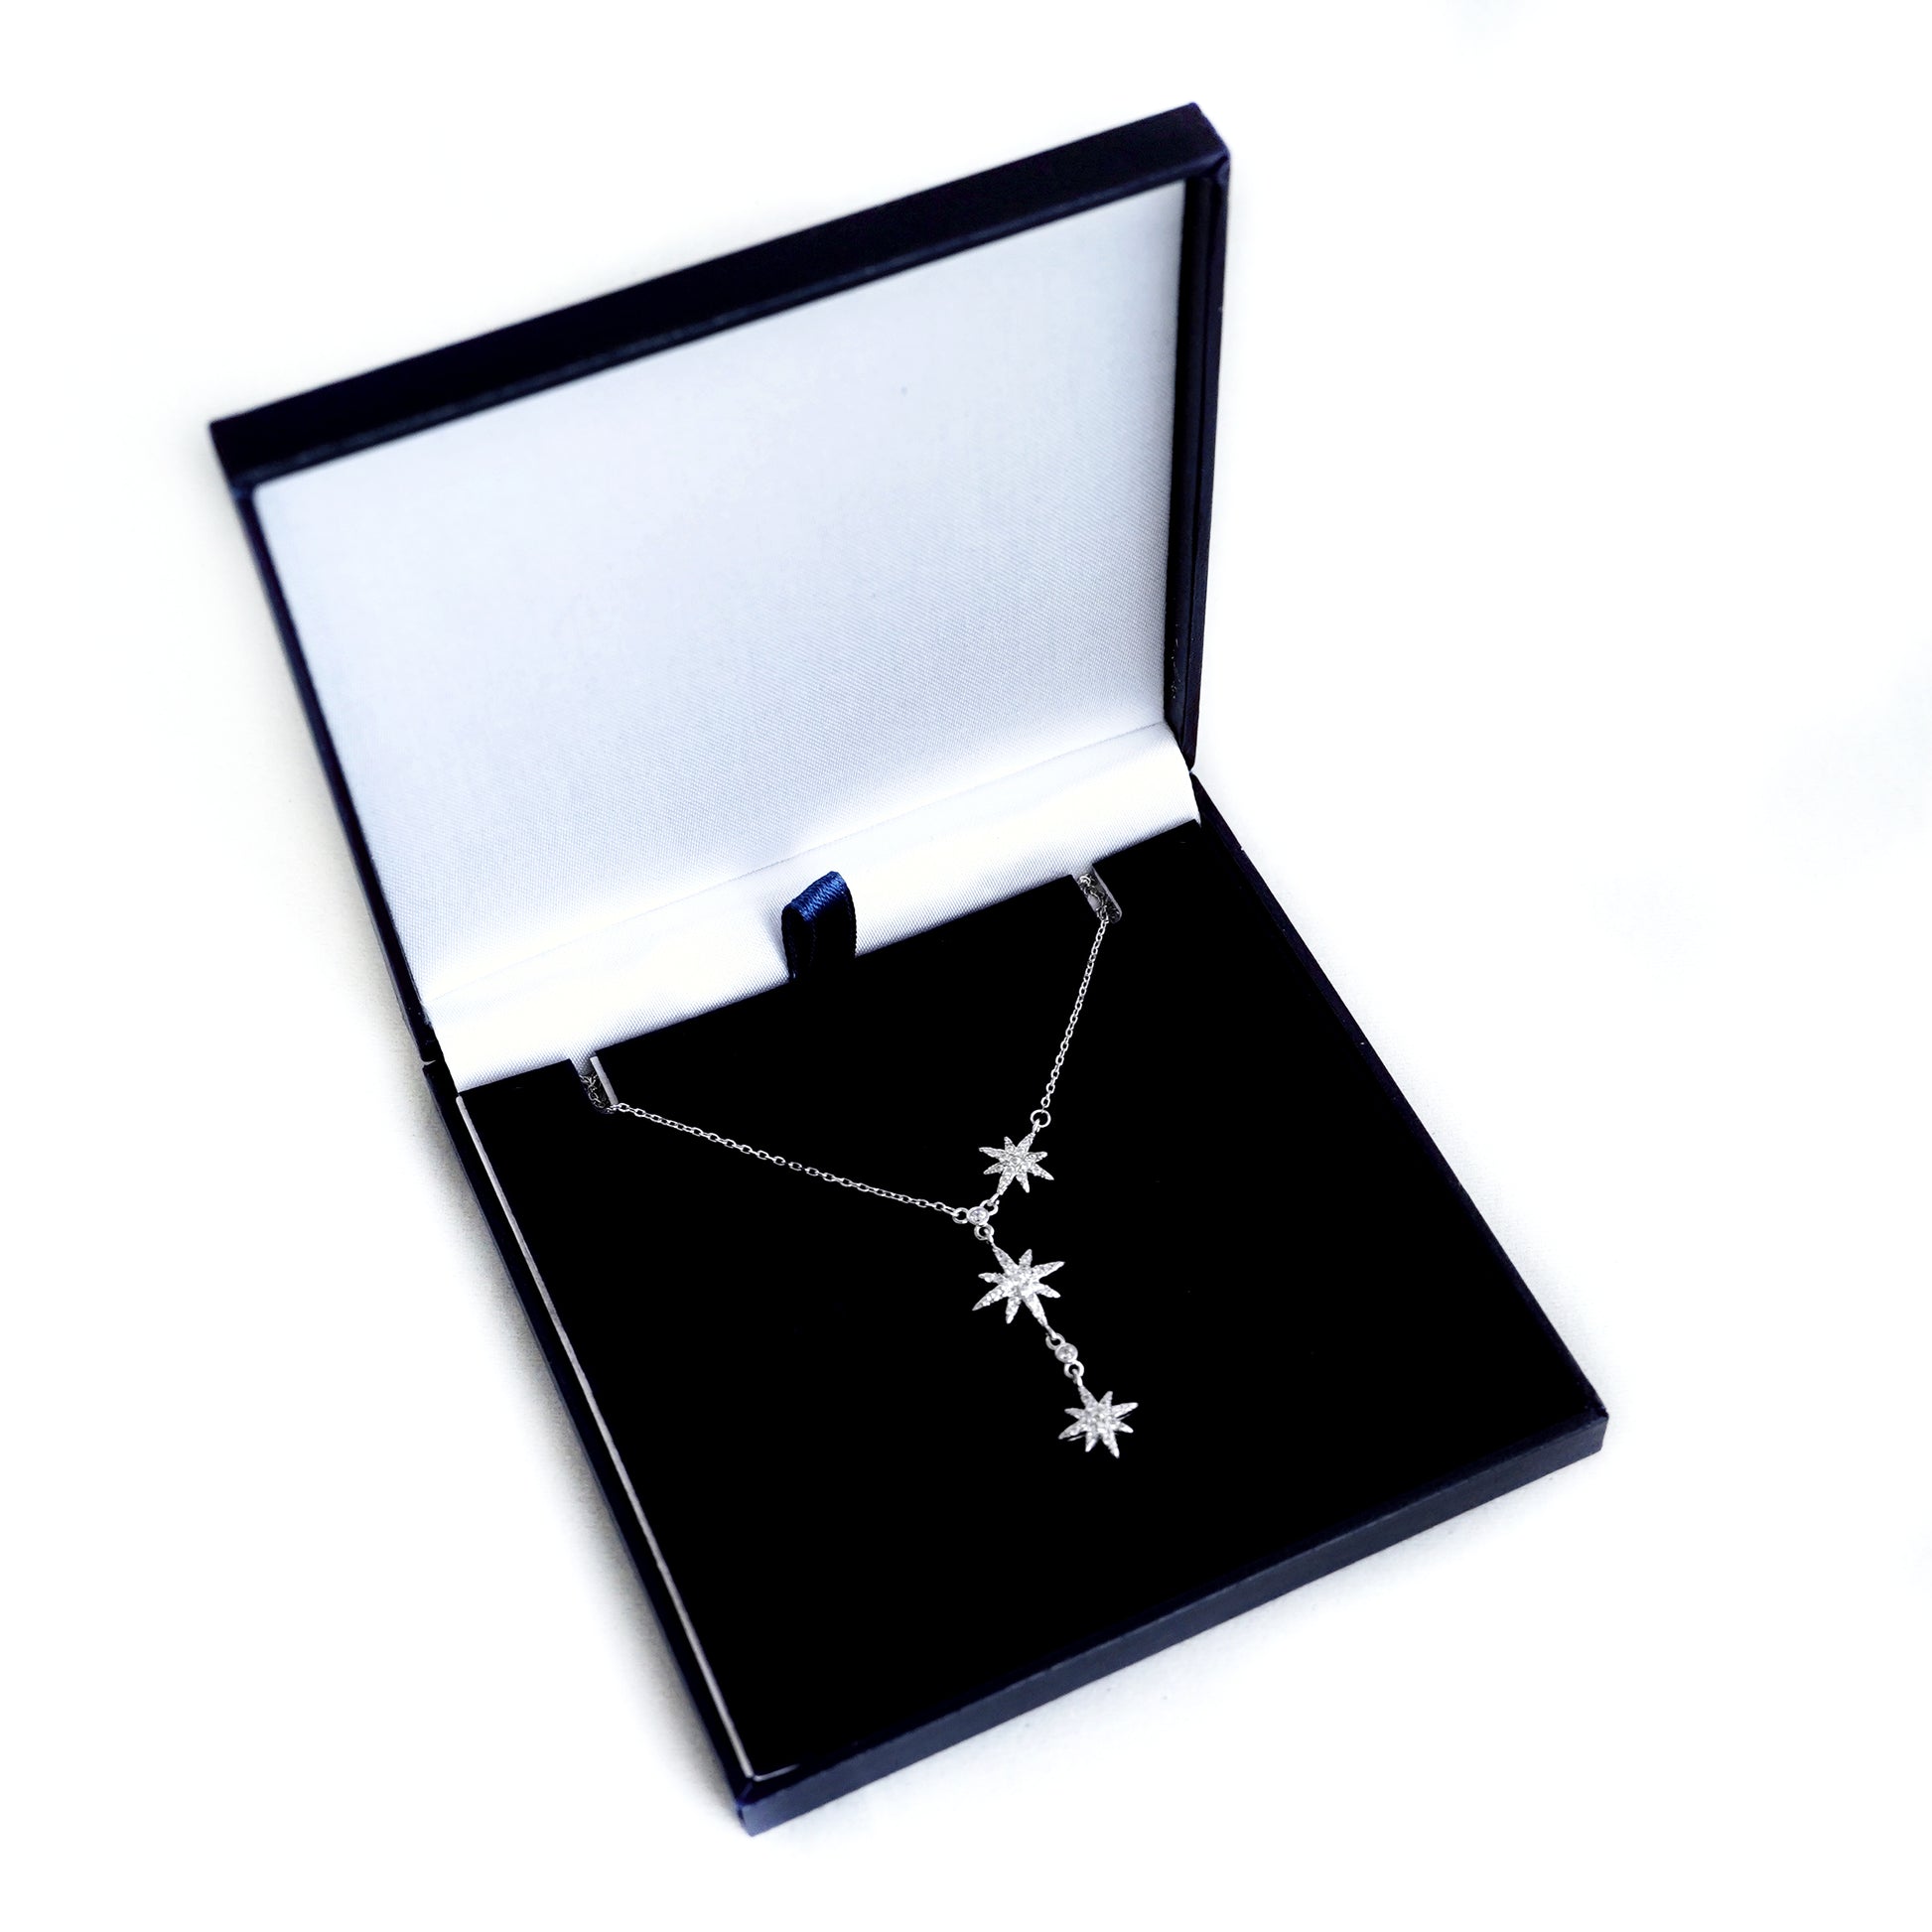 Slimline Dark Blue Leatherette Necklace Jewellery Presentation Display Box Case - sugarkittenlondon